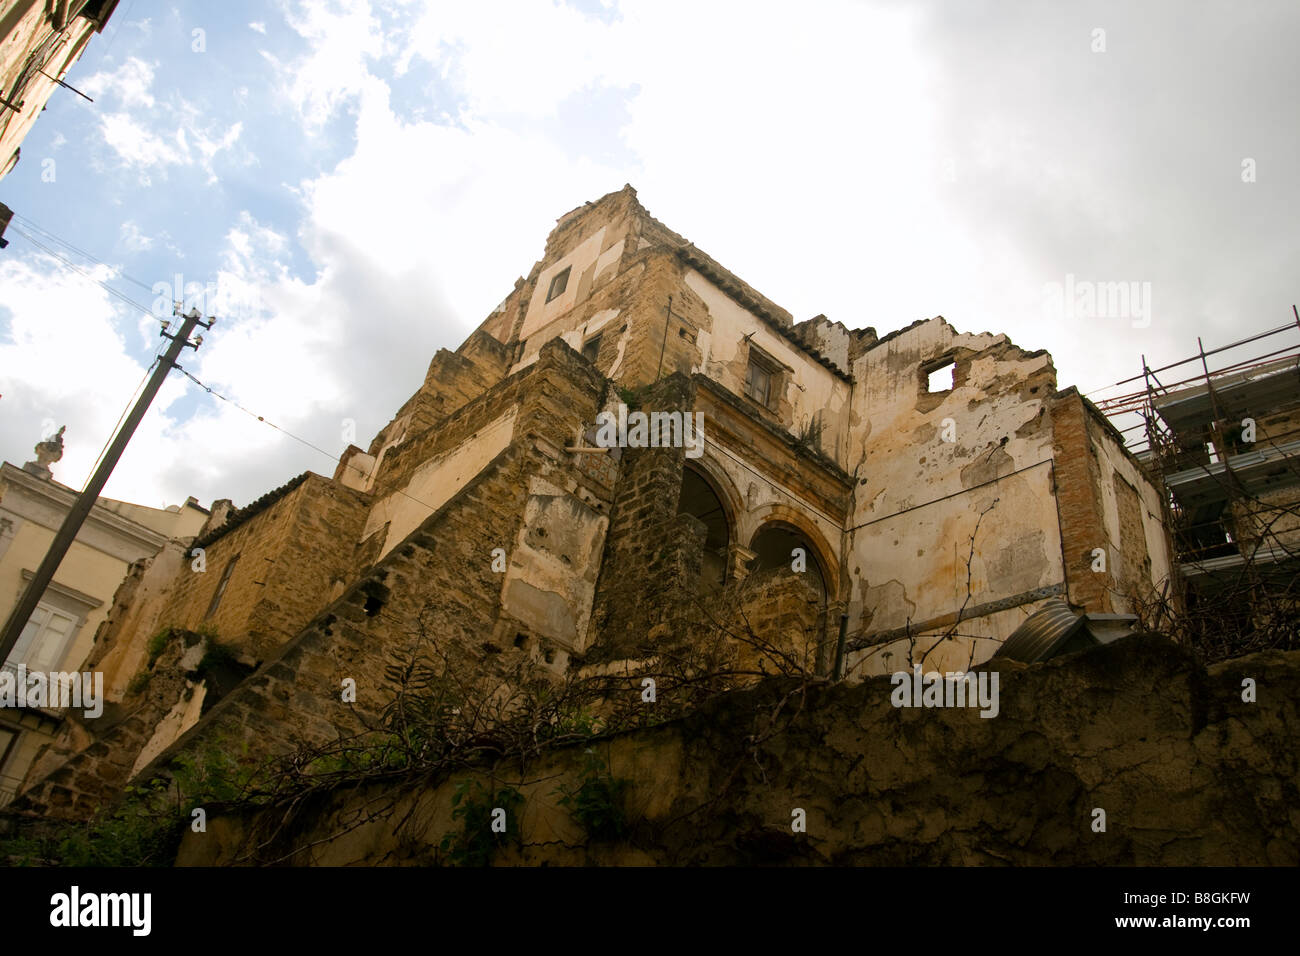 Semi-demolished house in Palermo, Sicily (Italy). Stock Photo